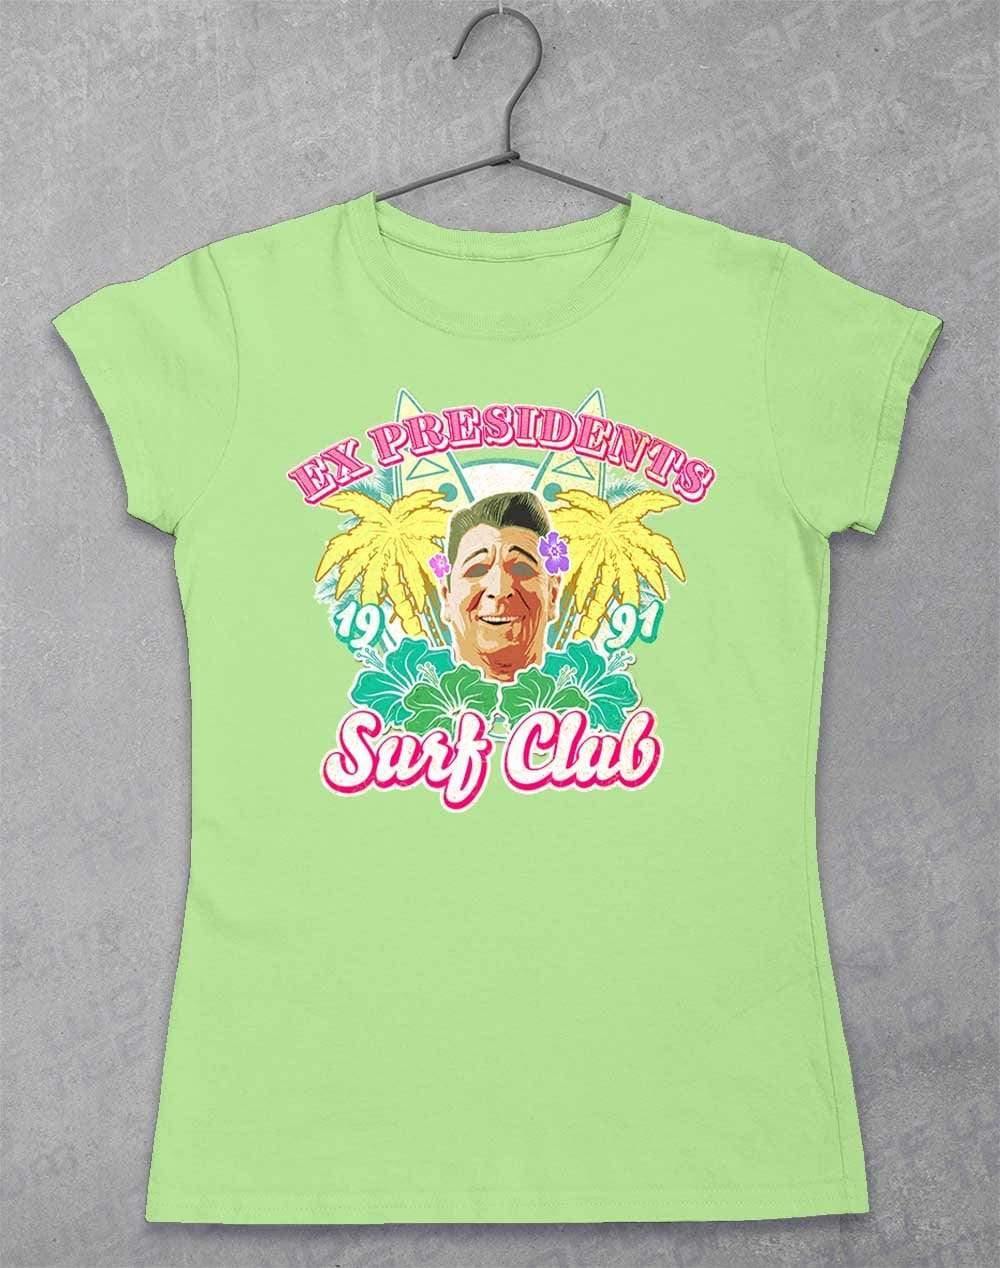 Ex Presidents Surf Club Womens T-Shirt 8-10 / Mint Green  - Off World Tees